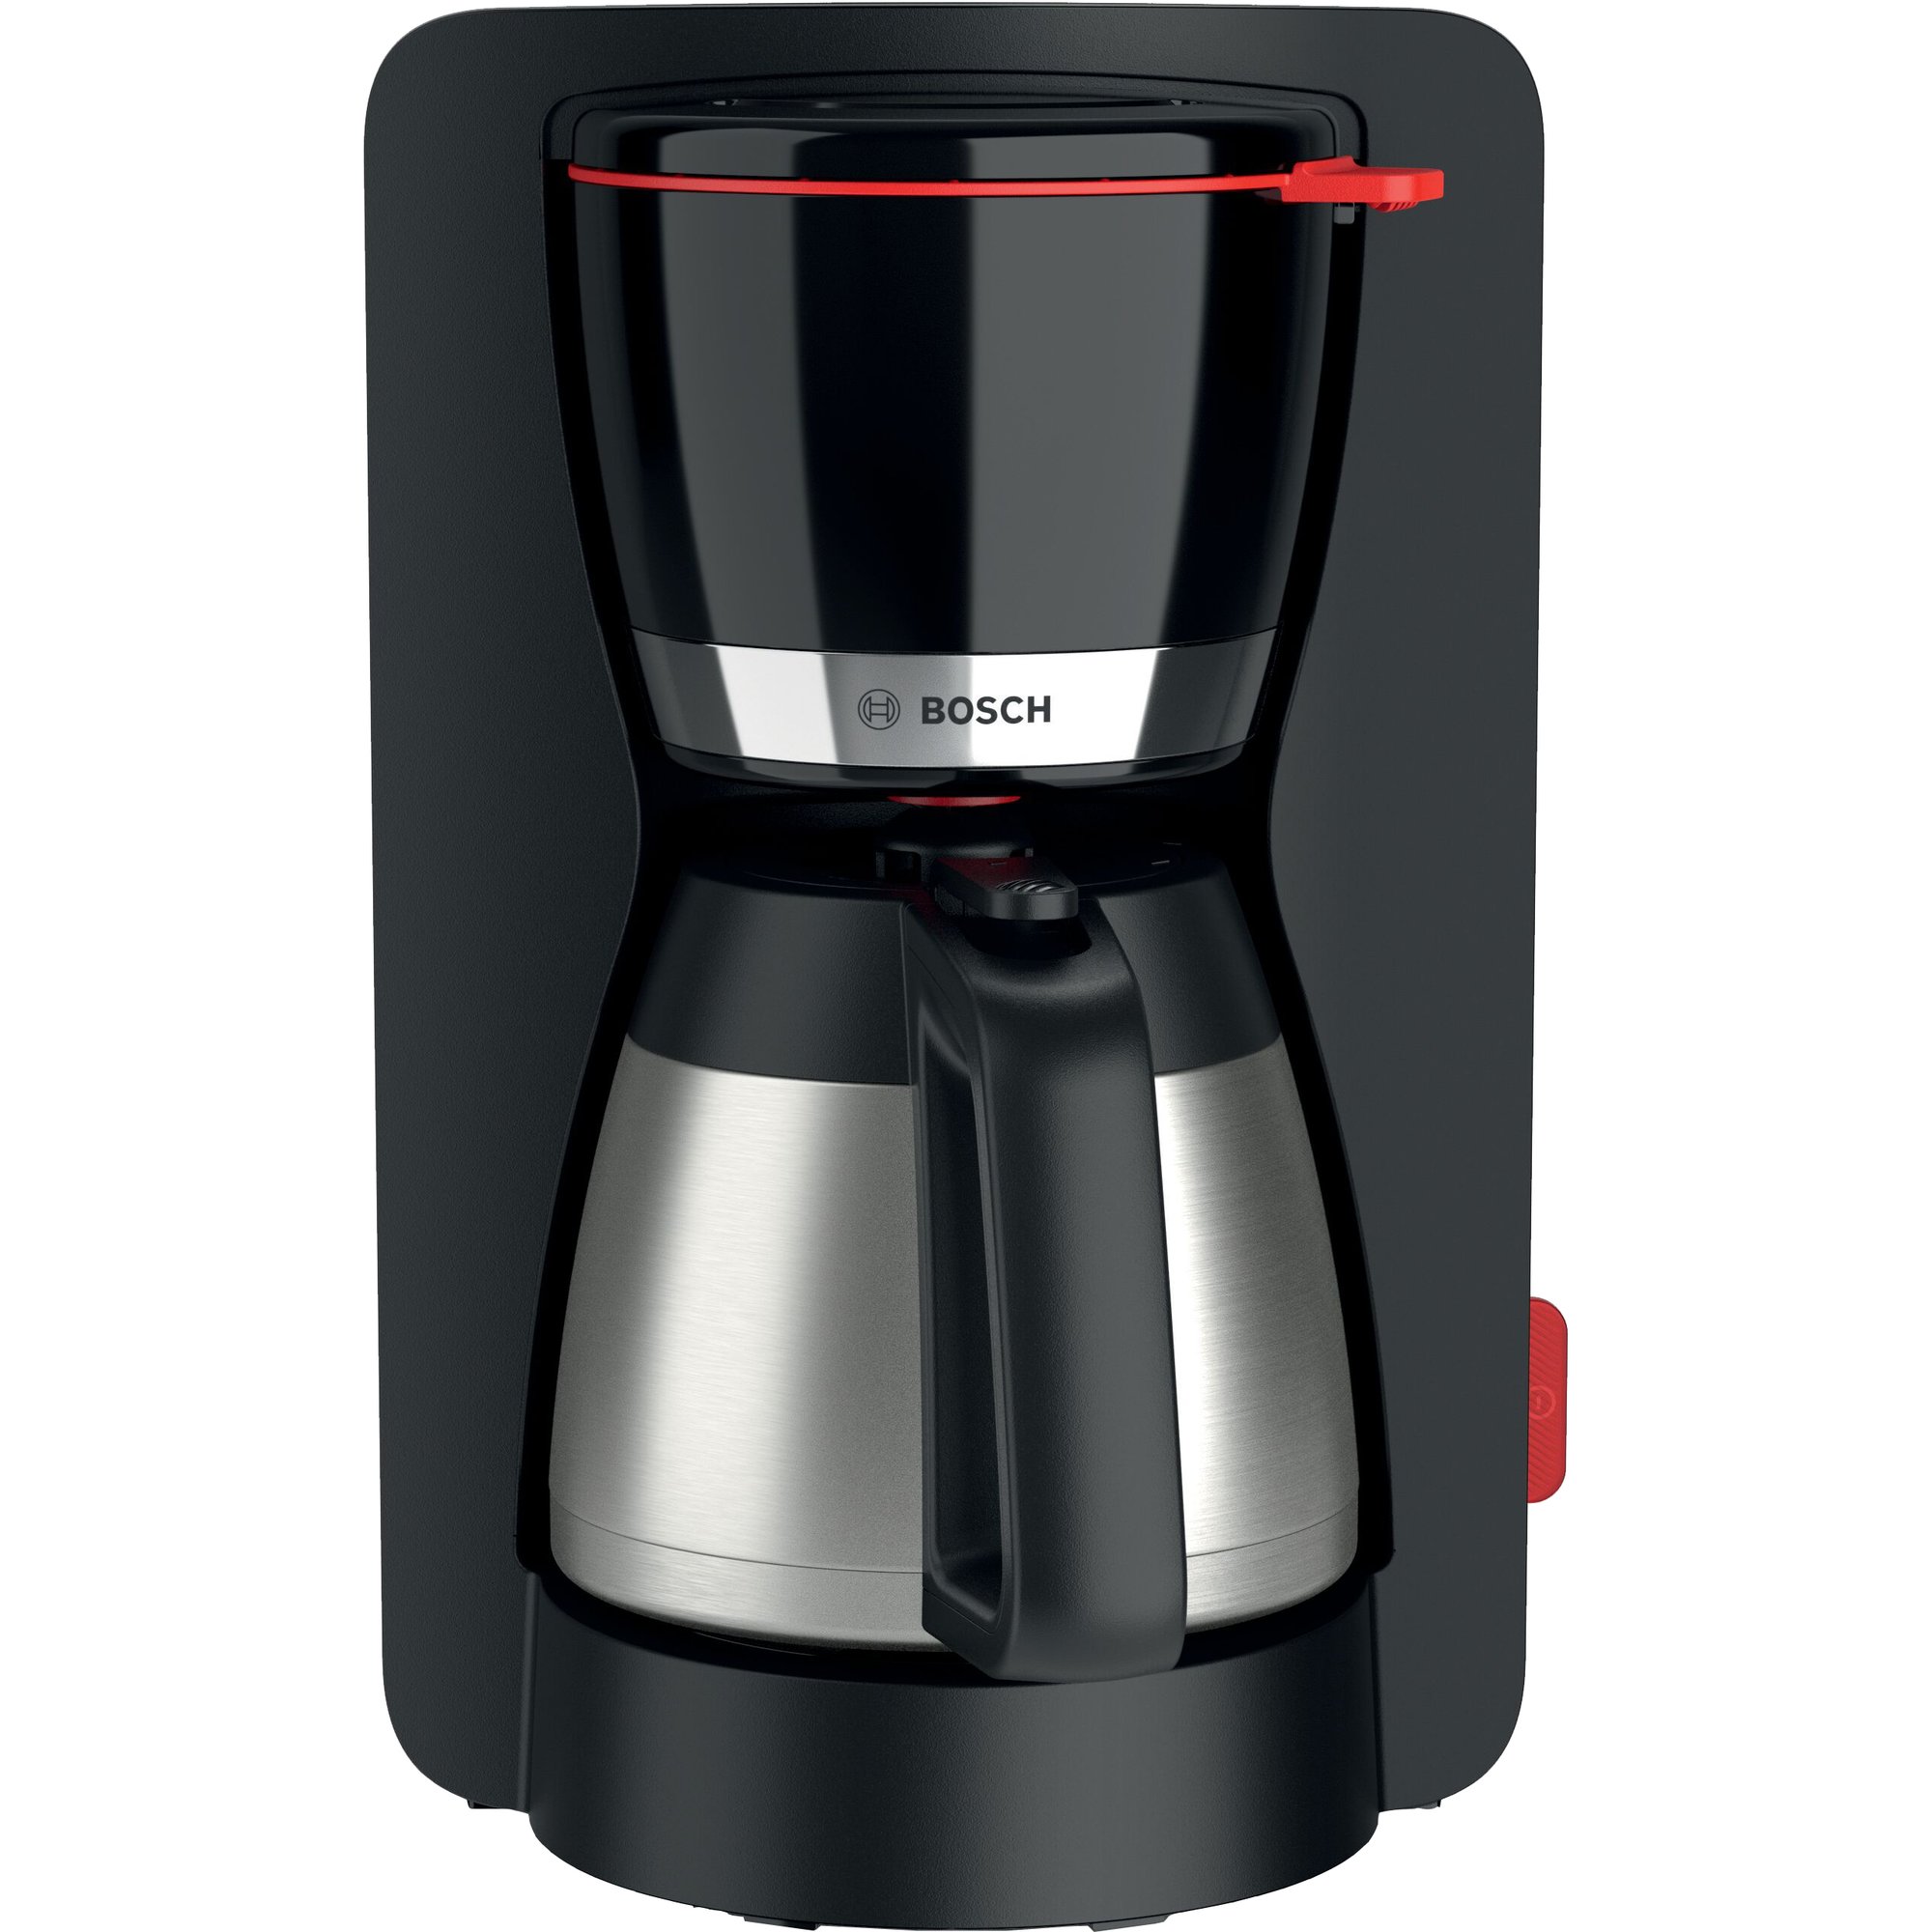 Bosch MyMoment Kaffemaskine med termokande, sort